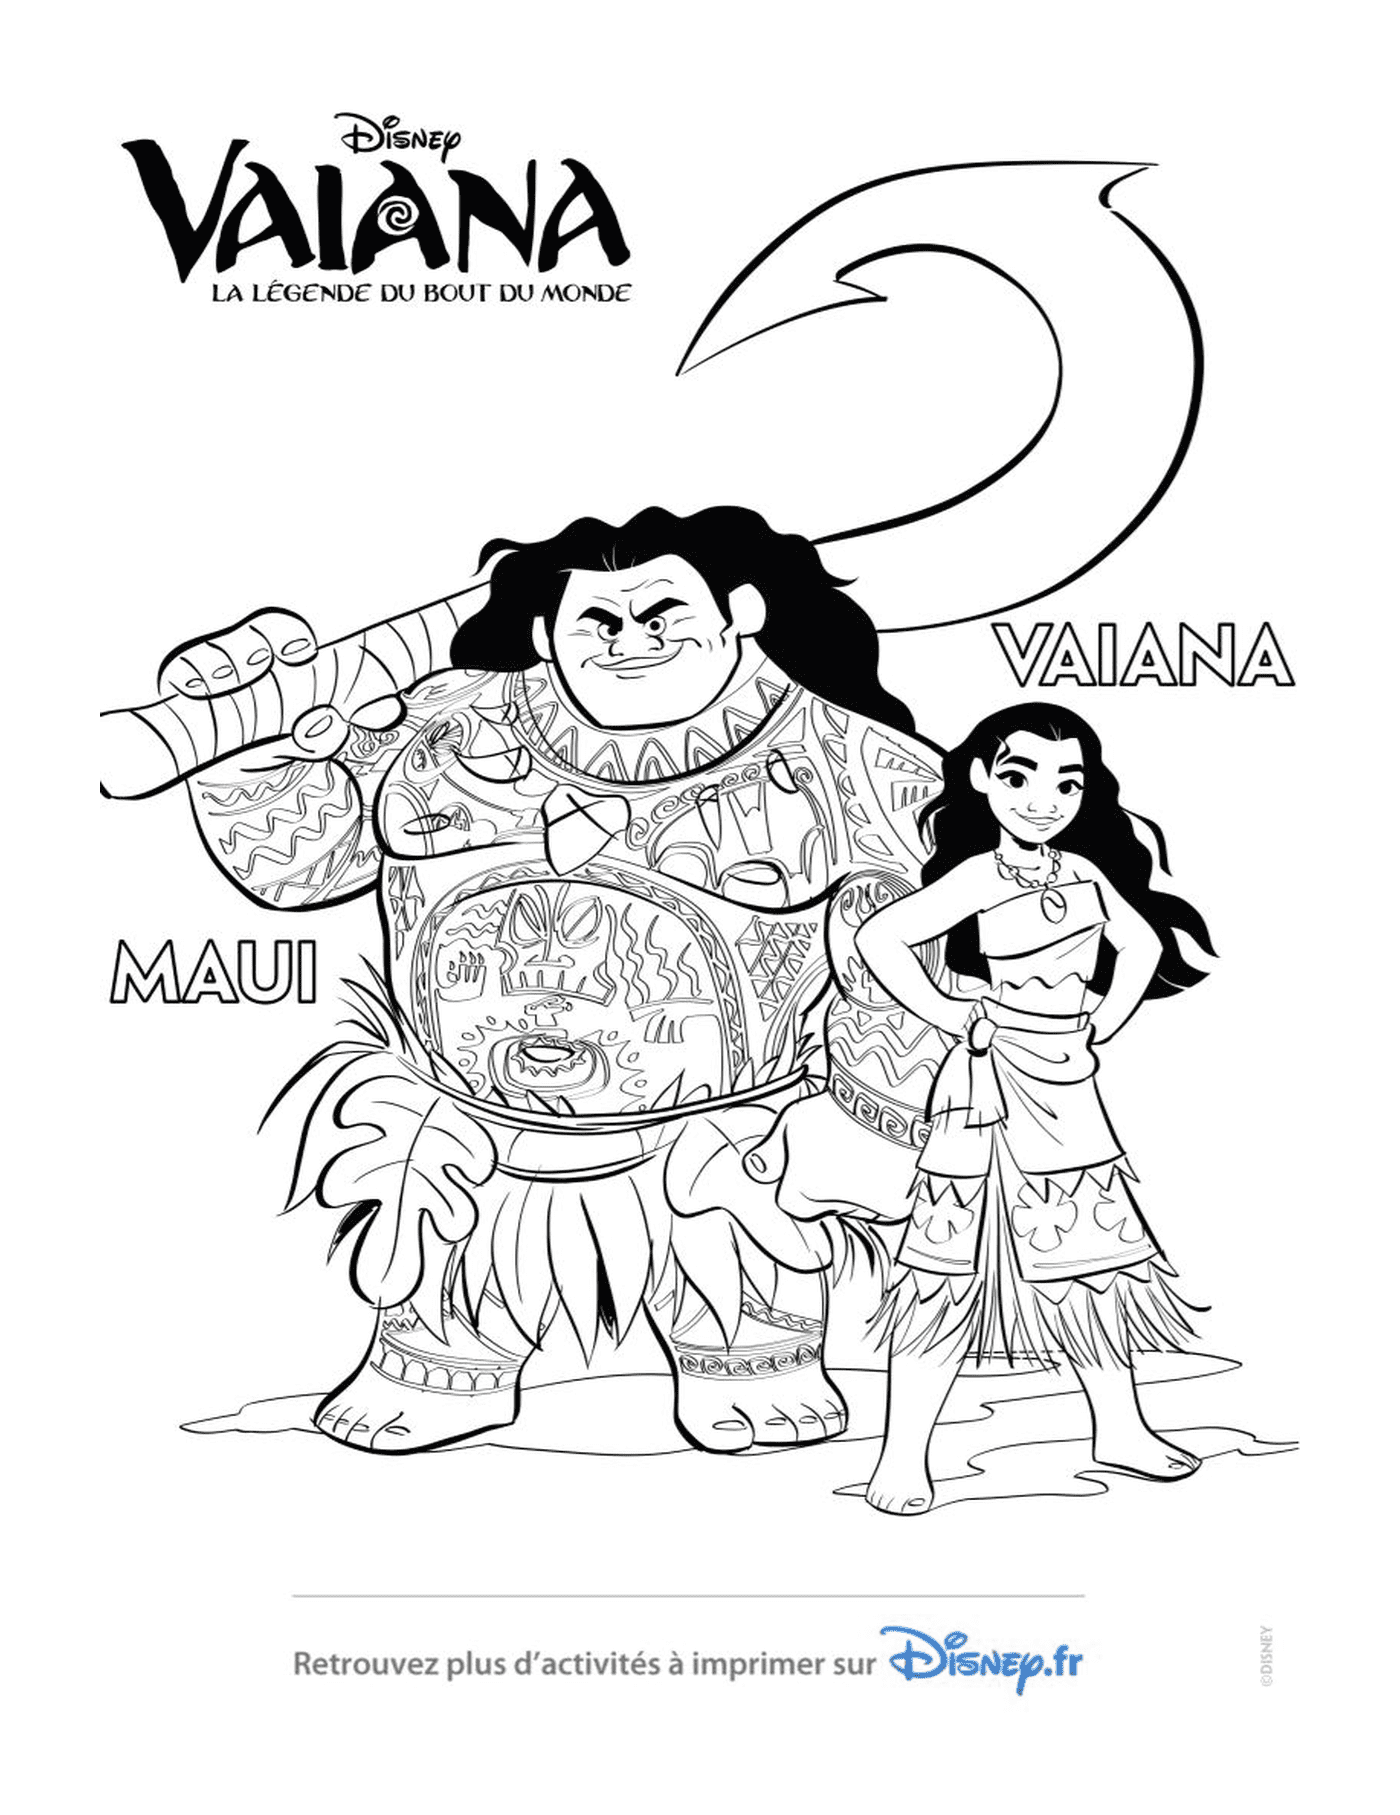  Moana and Maui, inseparable duo 